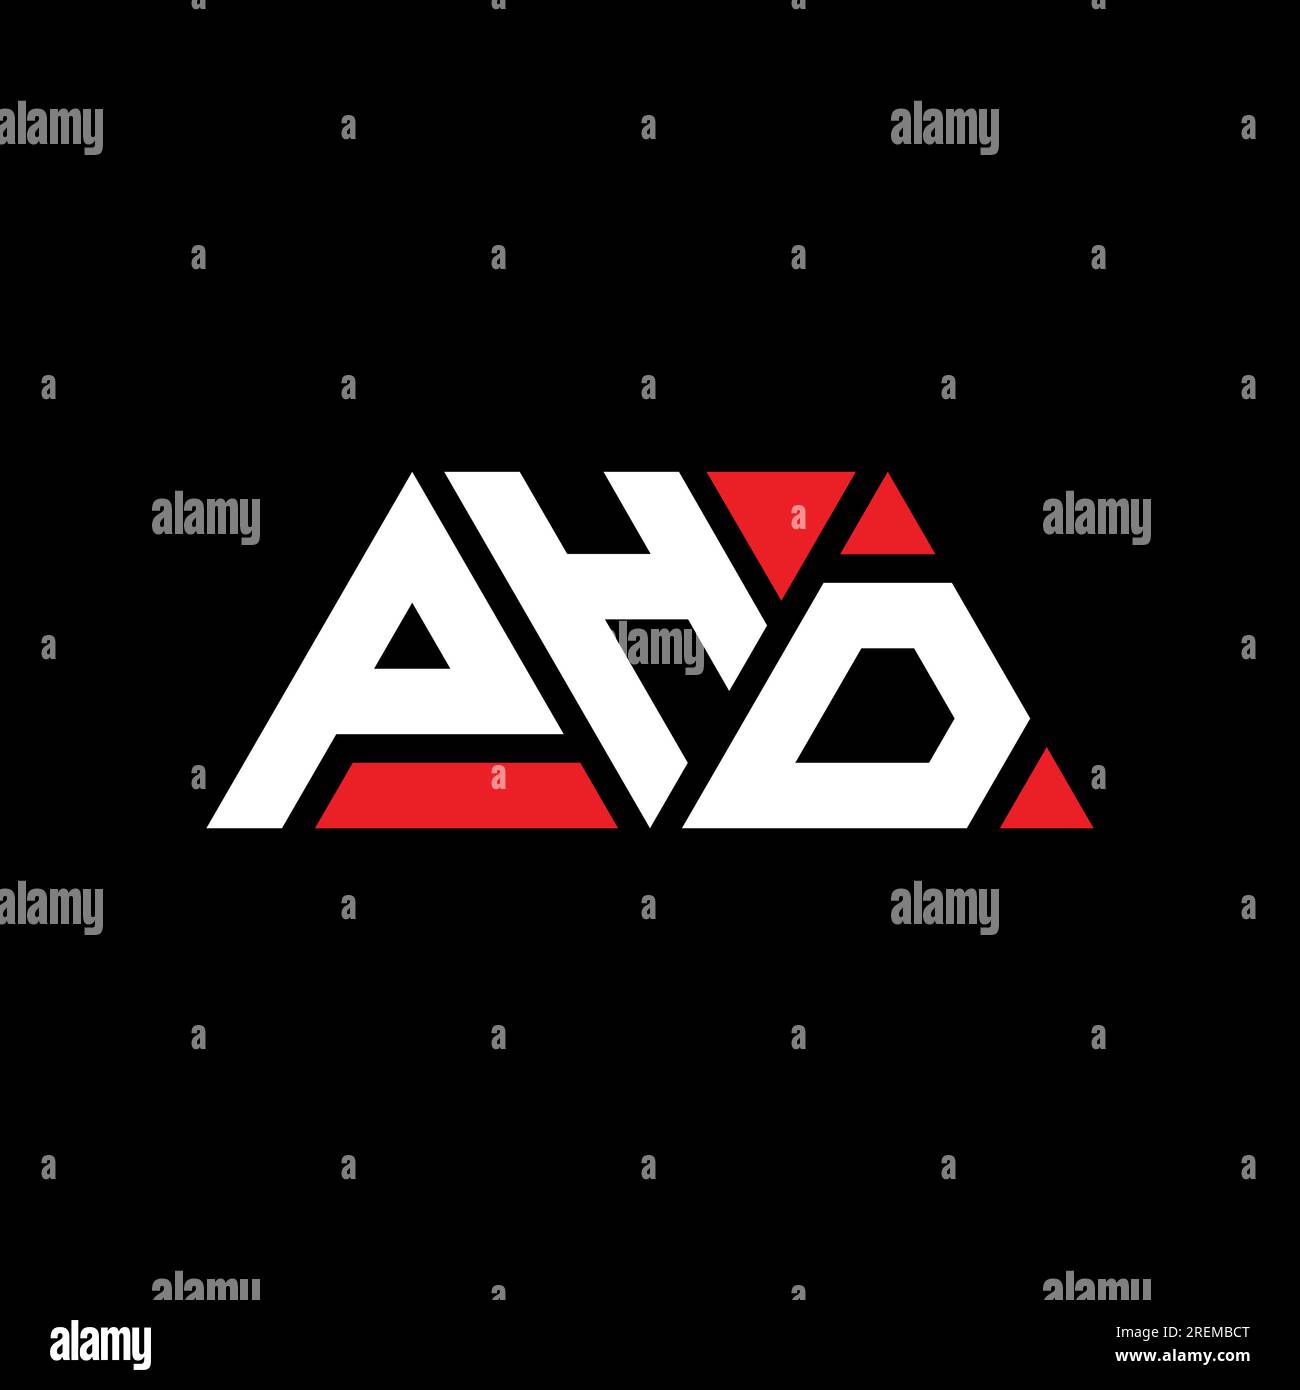 PHD-Logo mit Dreiecksbuchstaben in Dreiecksform. PHD Dreieck-Logo-Monogramm. VORLAGE für PHD-Dreieck-Vektor-Logo in roter Farbe. PHD Triangul Stock Vektor